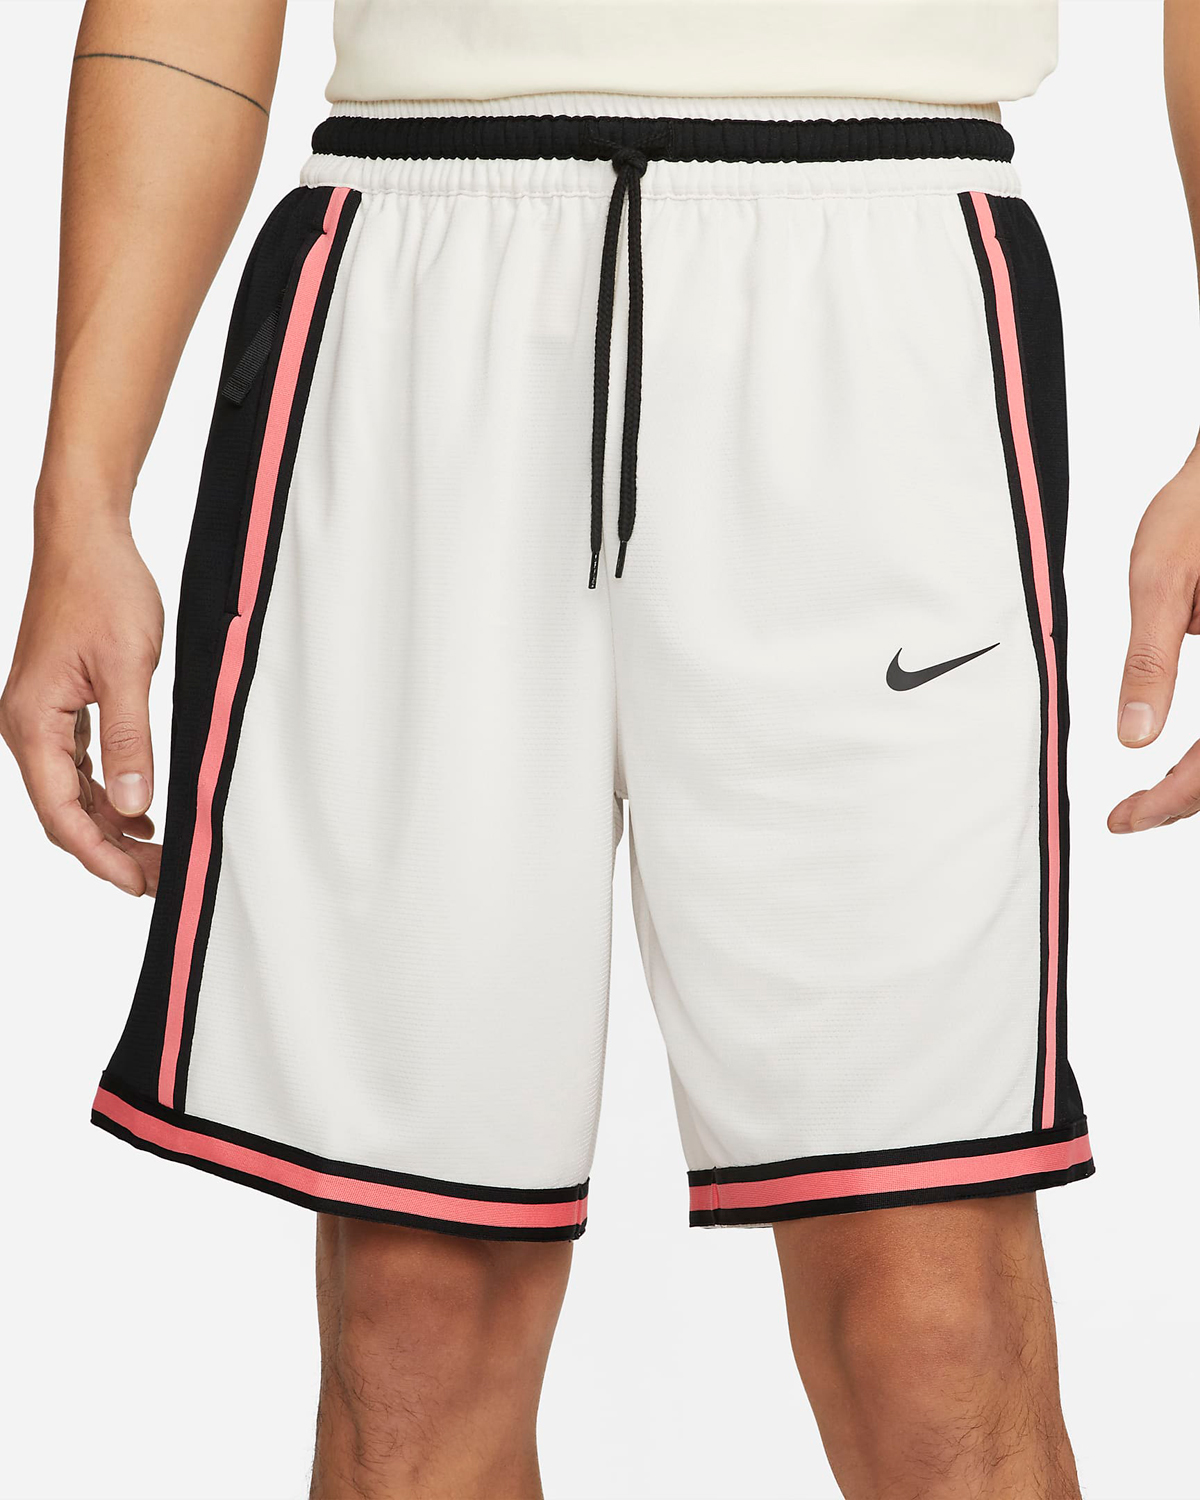 Nike-DNA-Basketball-Shorts-Phantom